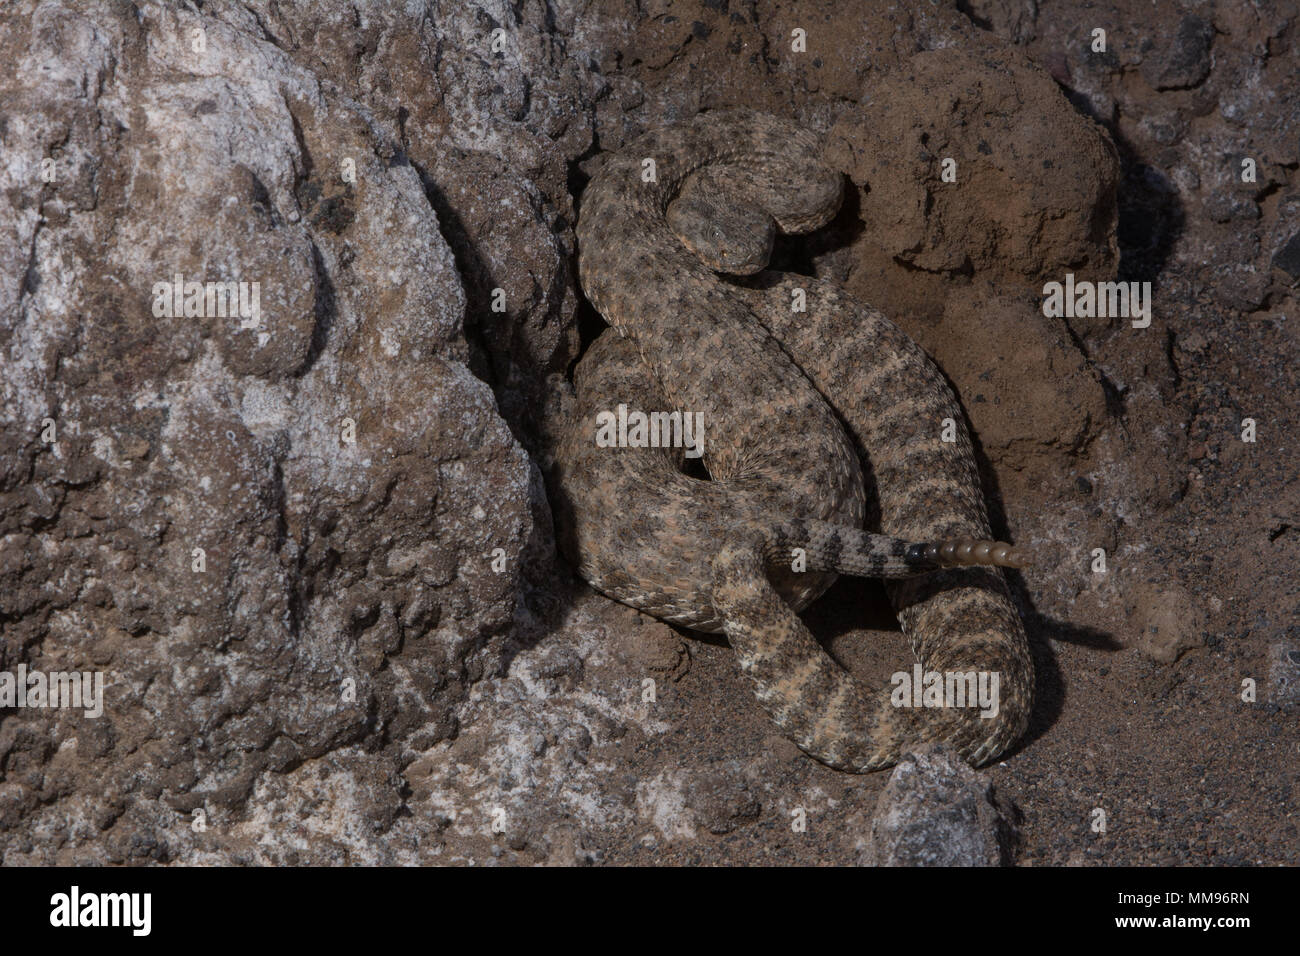 Horse Head Island Rattlesnake (Crotalus polisi) from Isla Cabeza de Caballo, Baja California, Mexico. Stock Photo